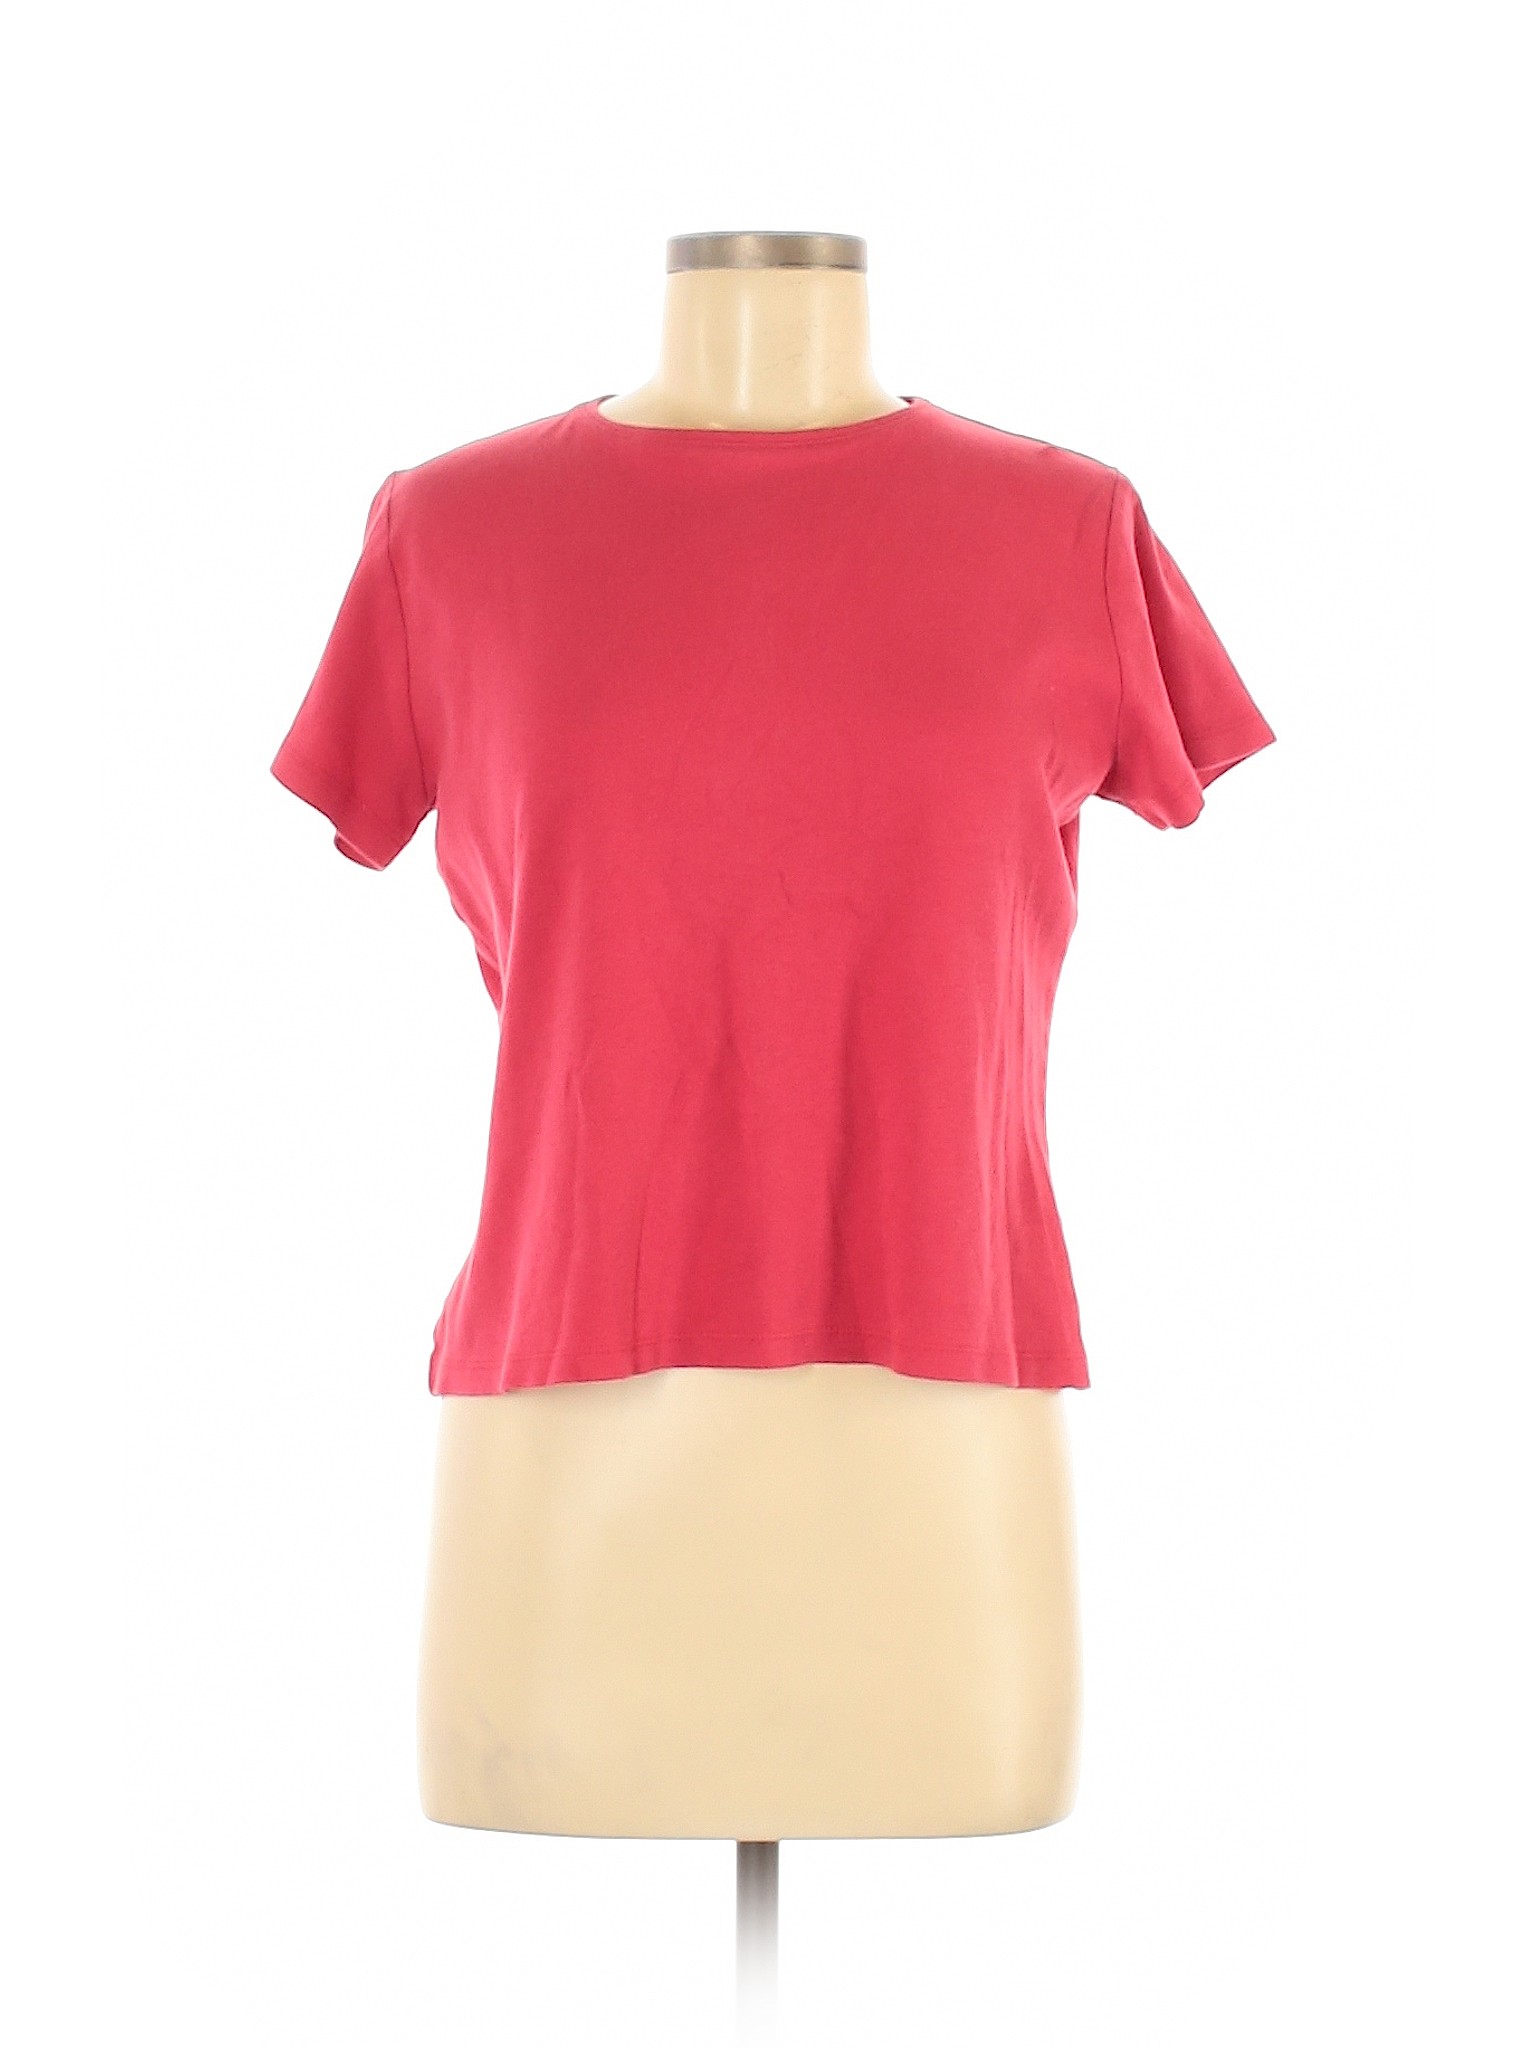 Coldwater Creek Women Red Short Sleeve T-Shirt M | eBay